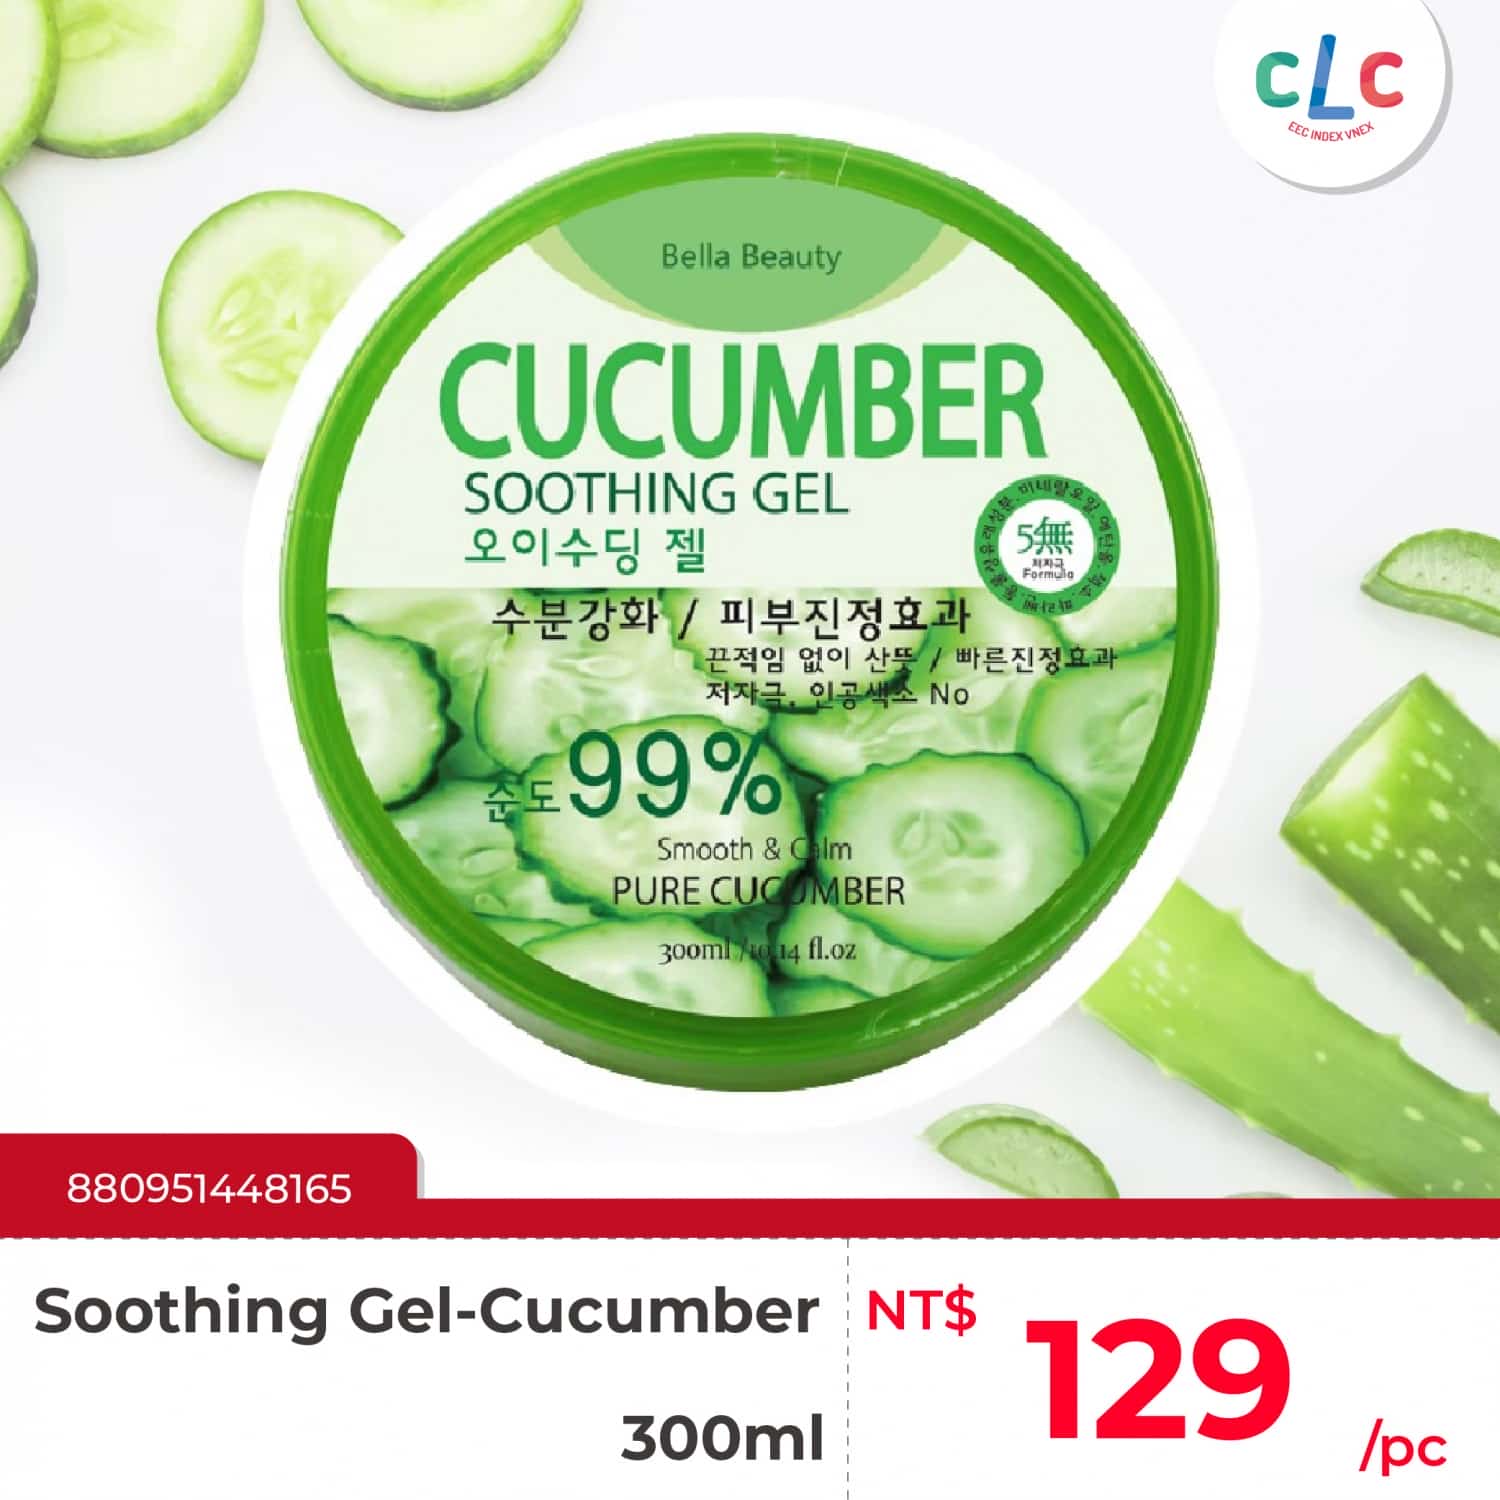 Bella Beauty Cucumber Moisture Soothing Gel 300ml